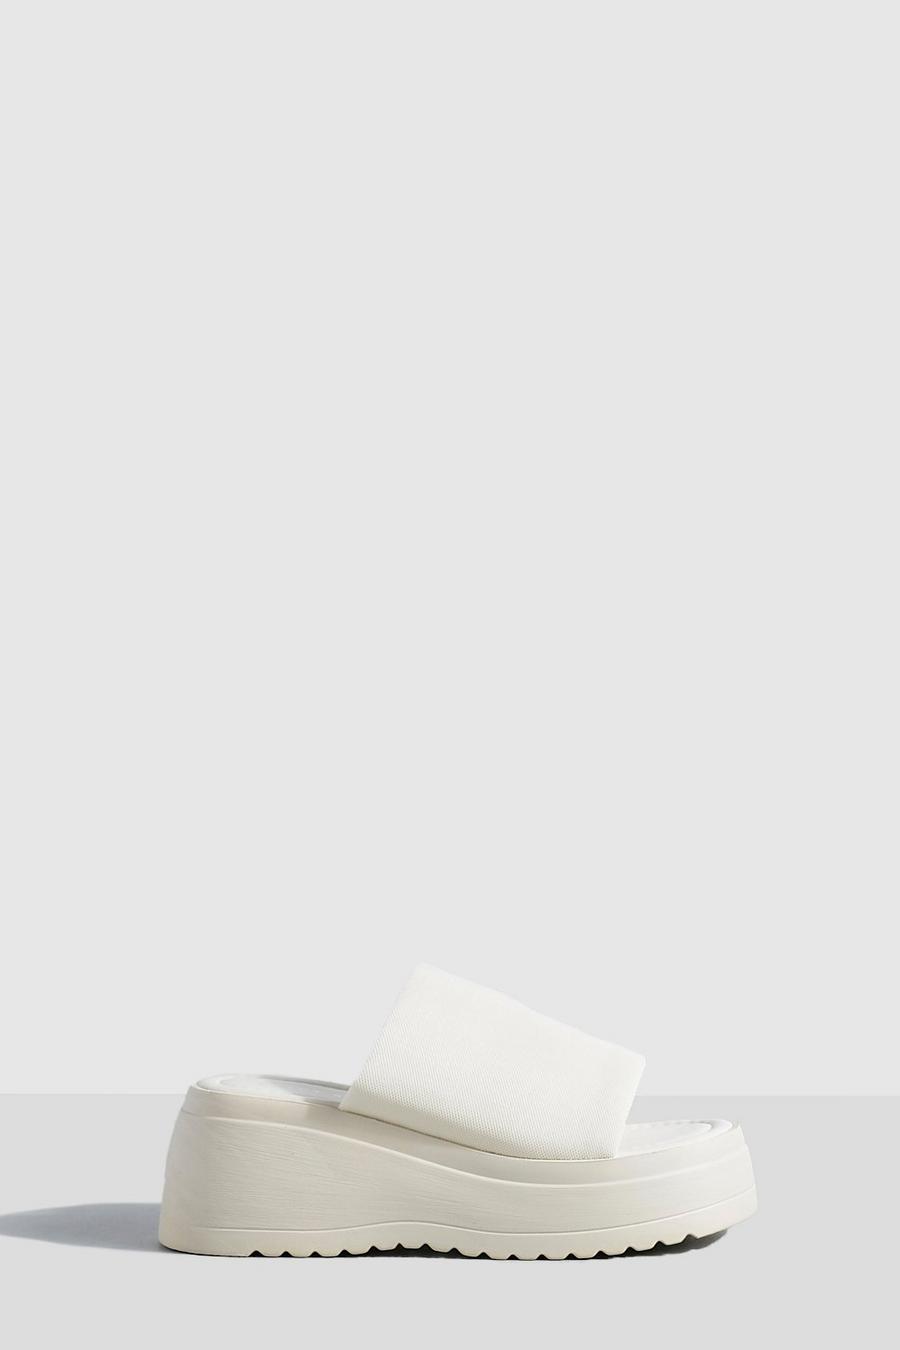 Sandali Flatform a calzata ampia con suola spessa, Cream bianco